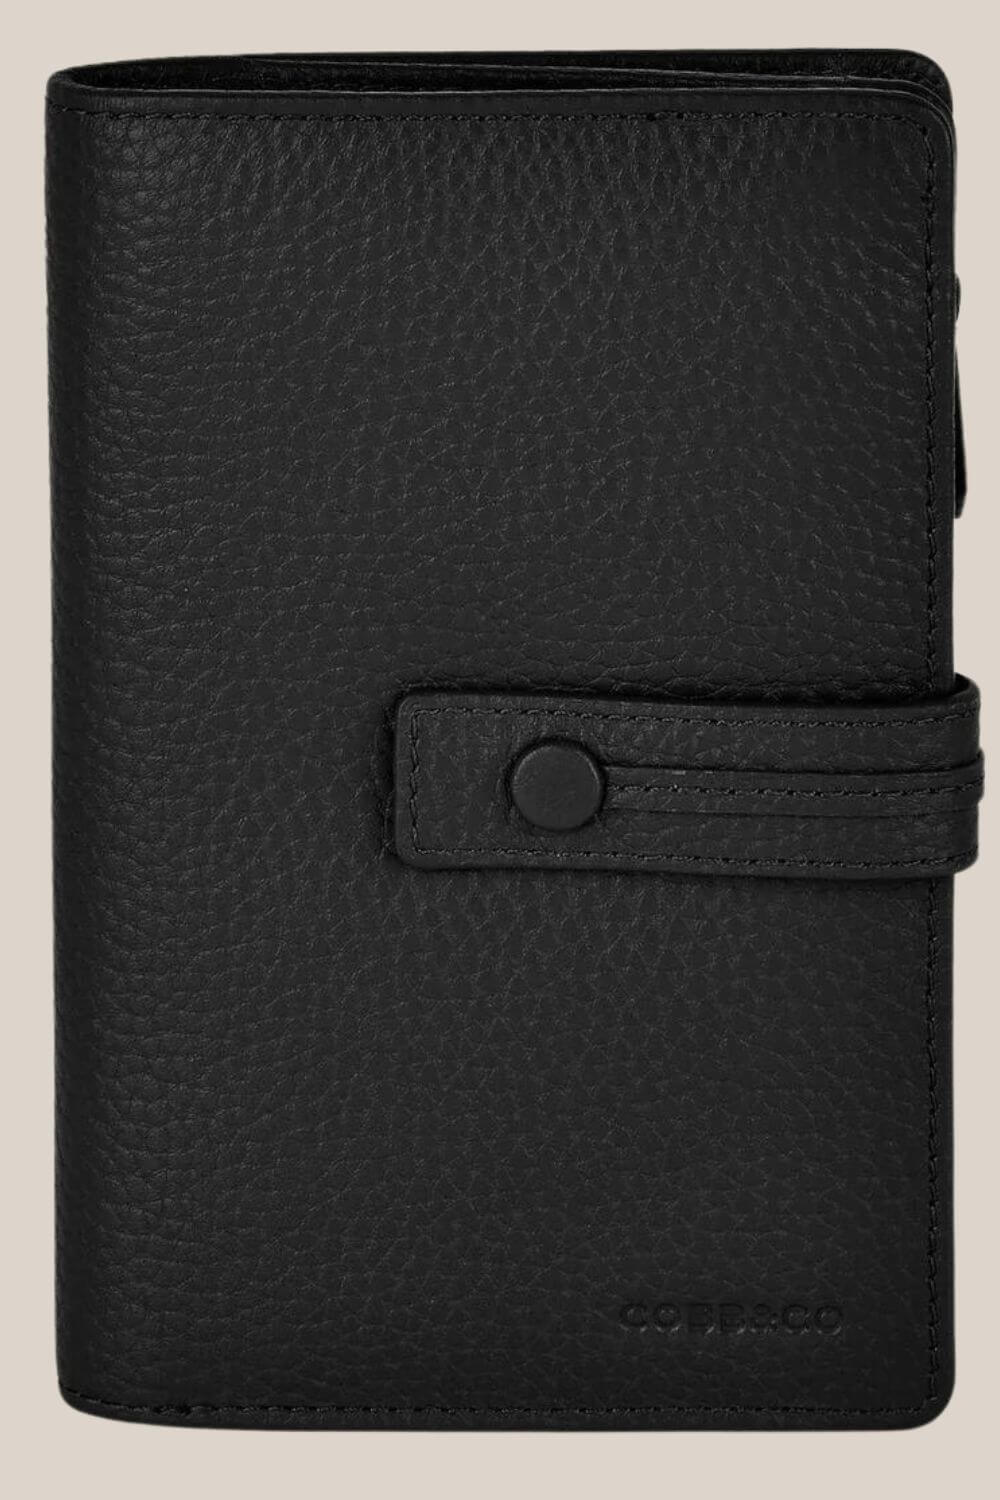 Cobb & Co Epsom Leather Medium Wallet